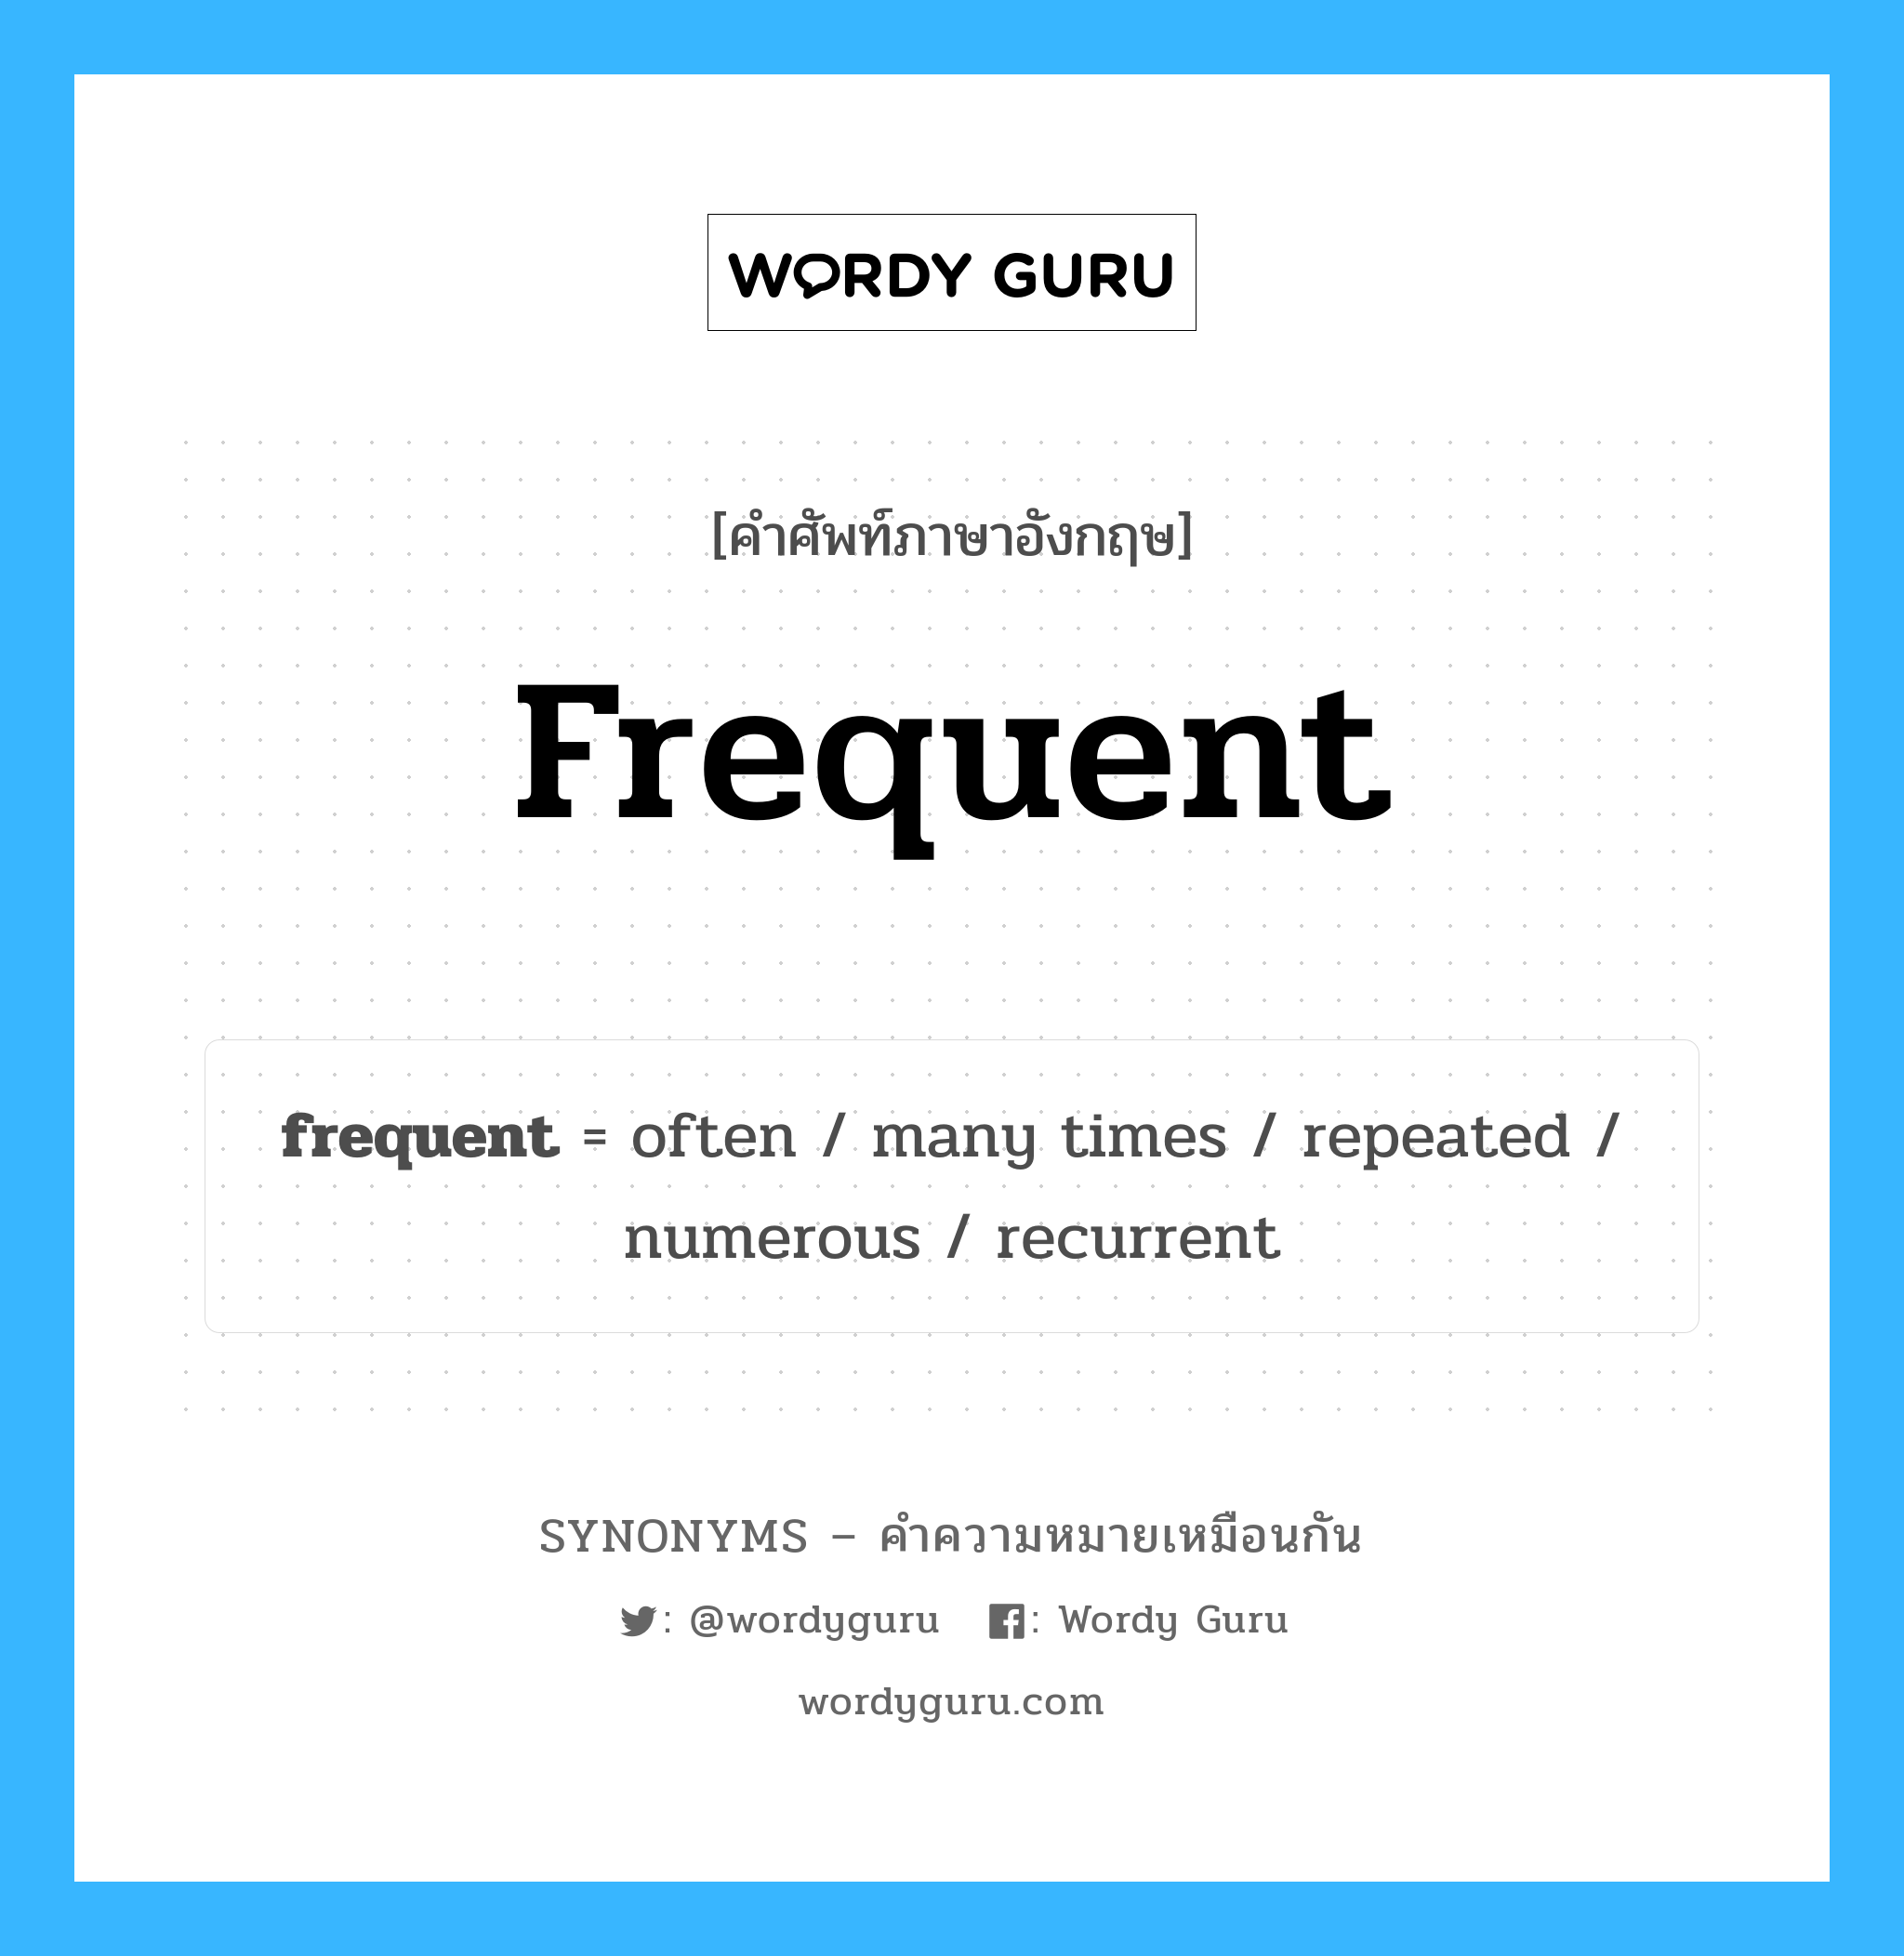 frequent เป็นหนึ่งใน often และมีคำอื่น ๆ อีกดังนี้, คำศัพท์ภาษาอังกฤษ frequent ความหมายคล้ายกันกับ often แปลว่า มักจะ หมวด often